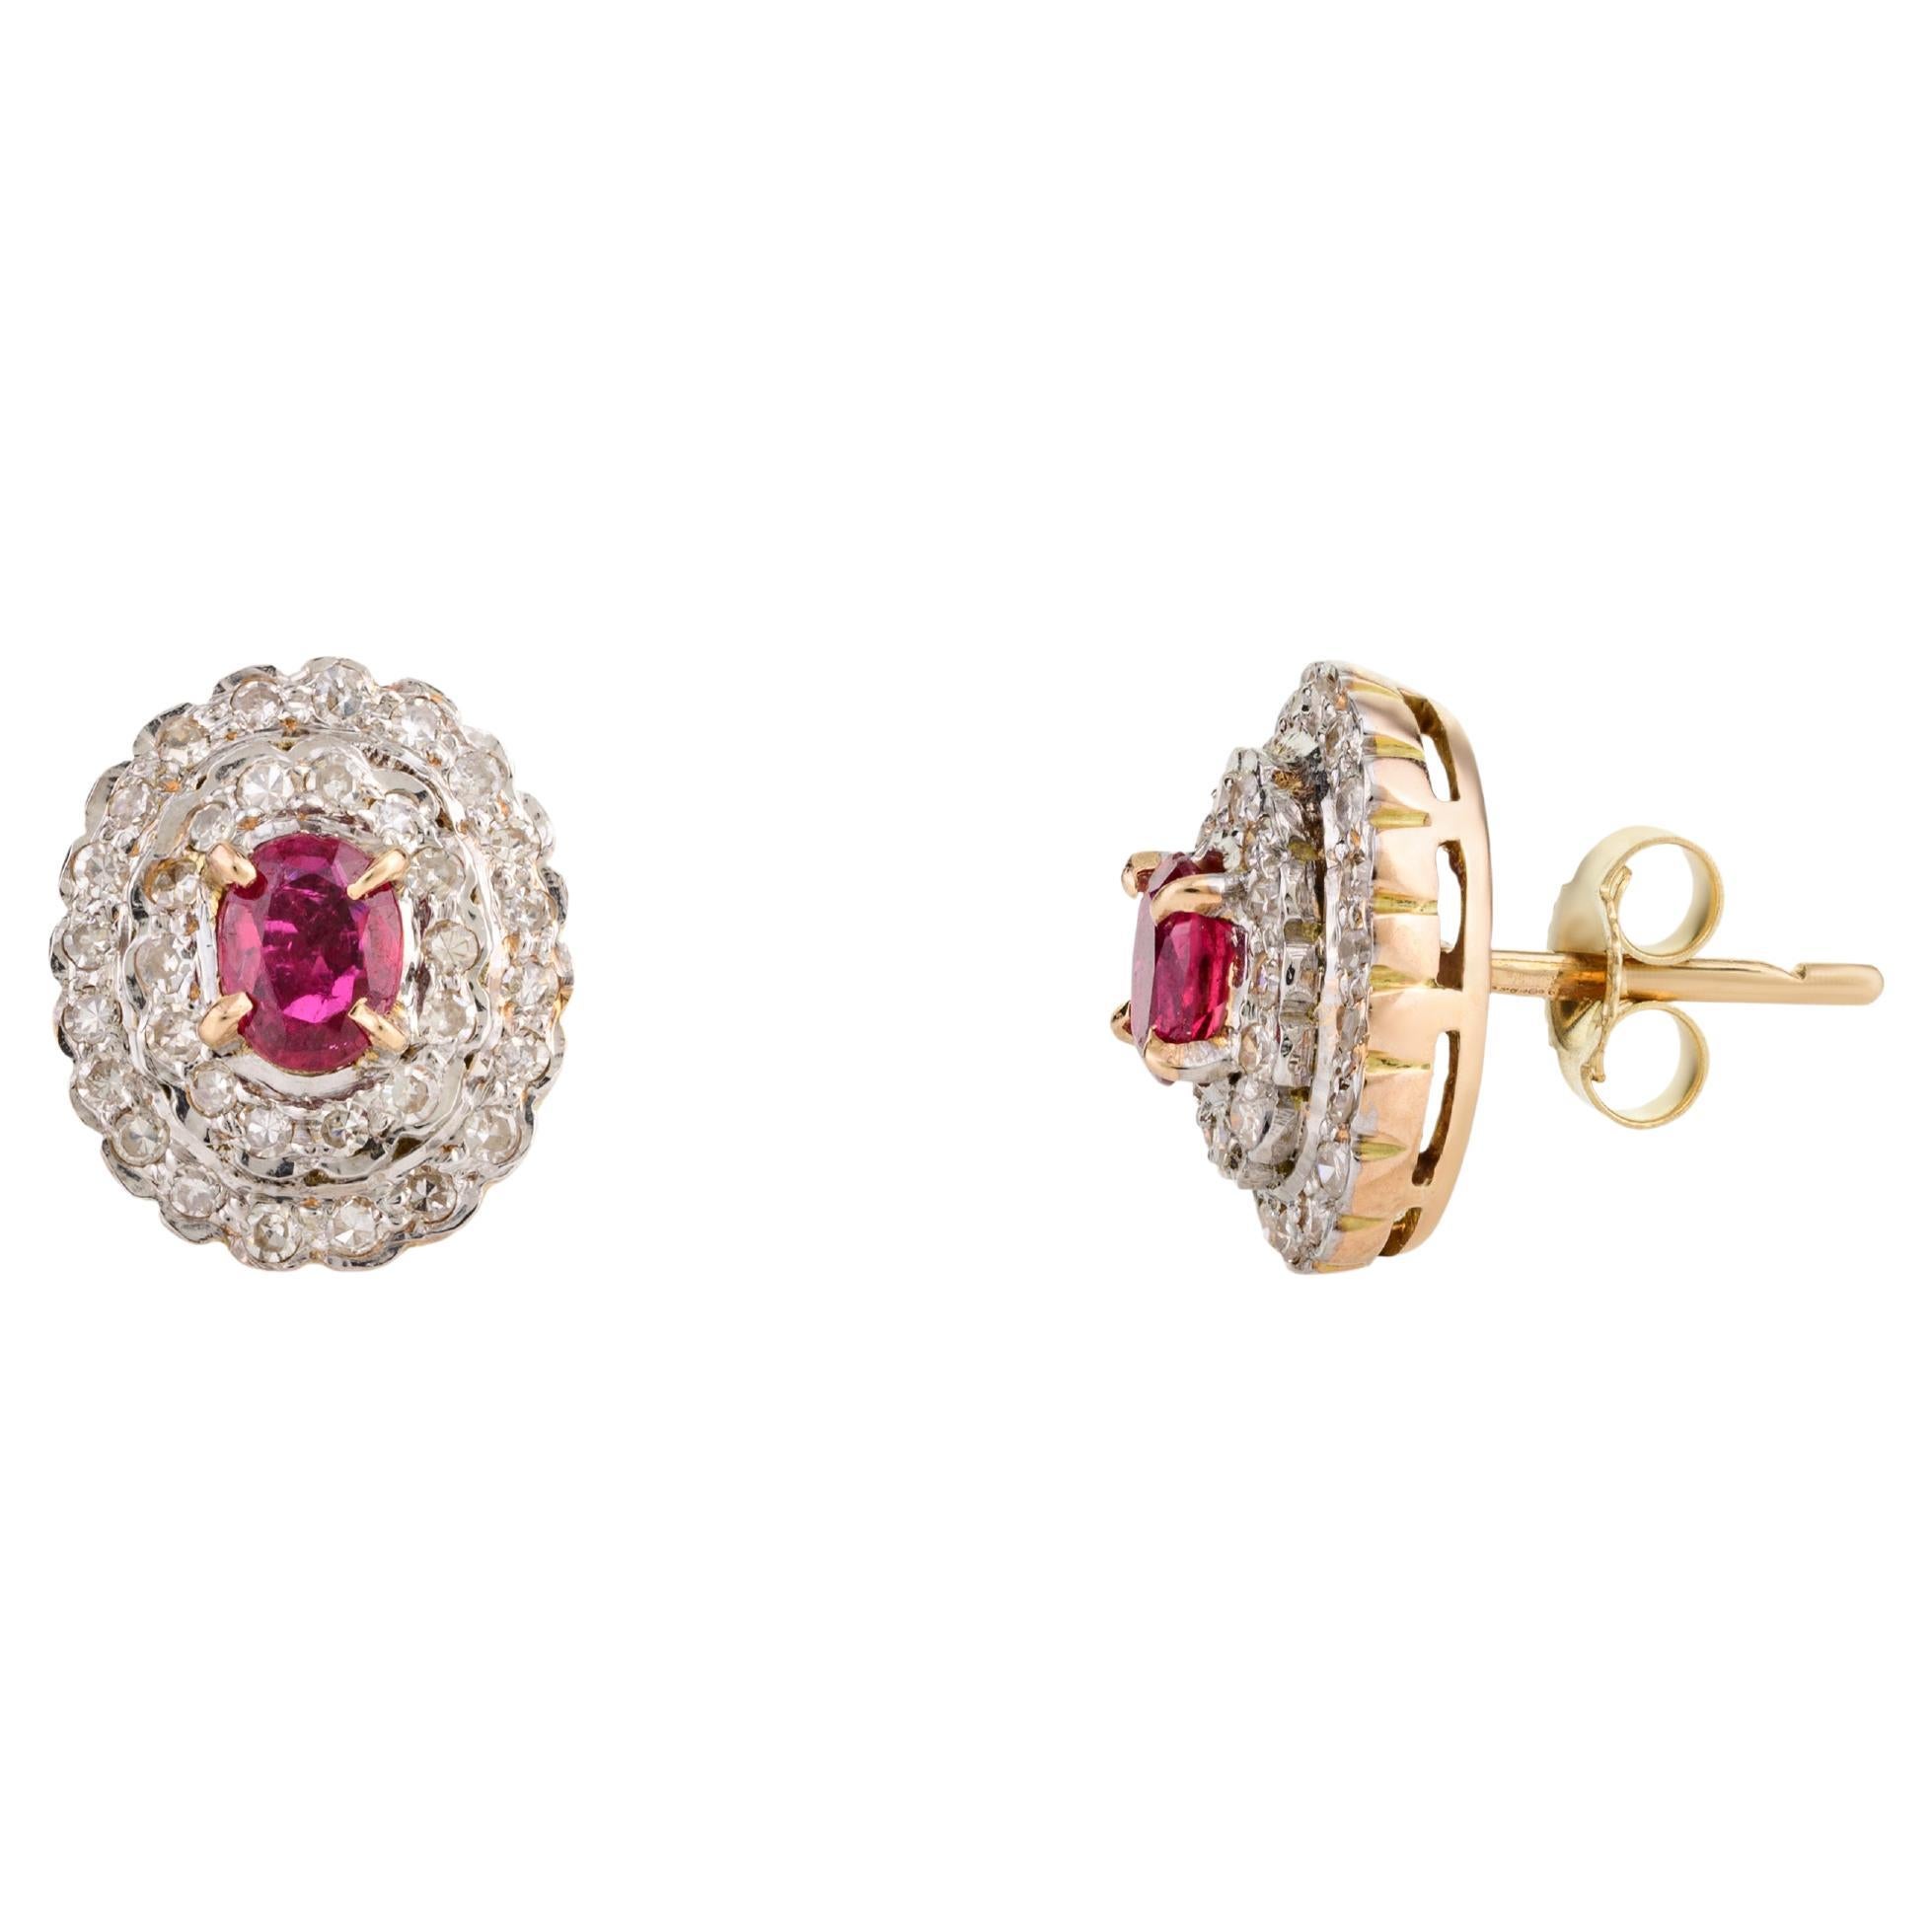 Certified Genuine Ruby and Halo Diamond Wedding Stud Earrings in 14k Yellow Gold